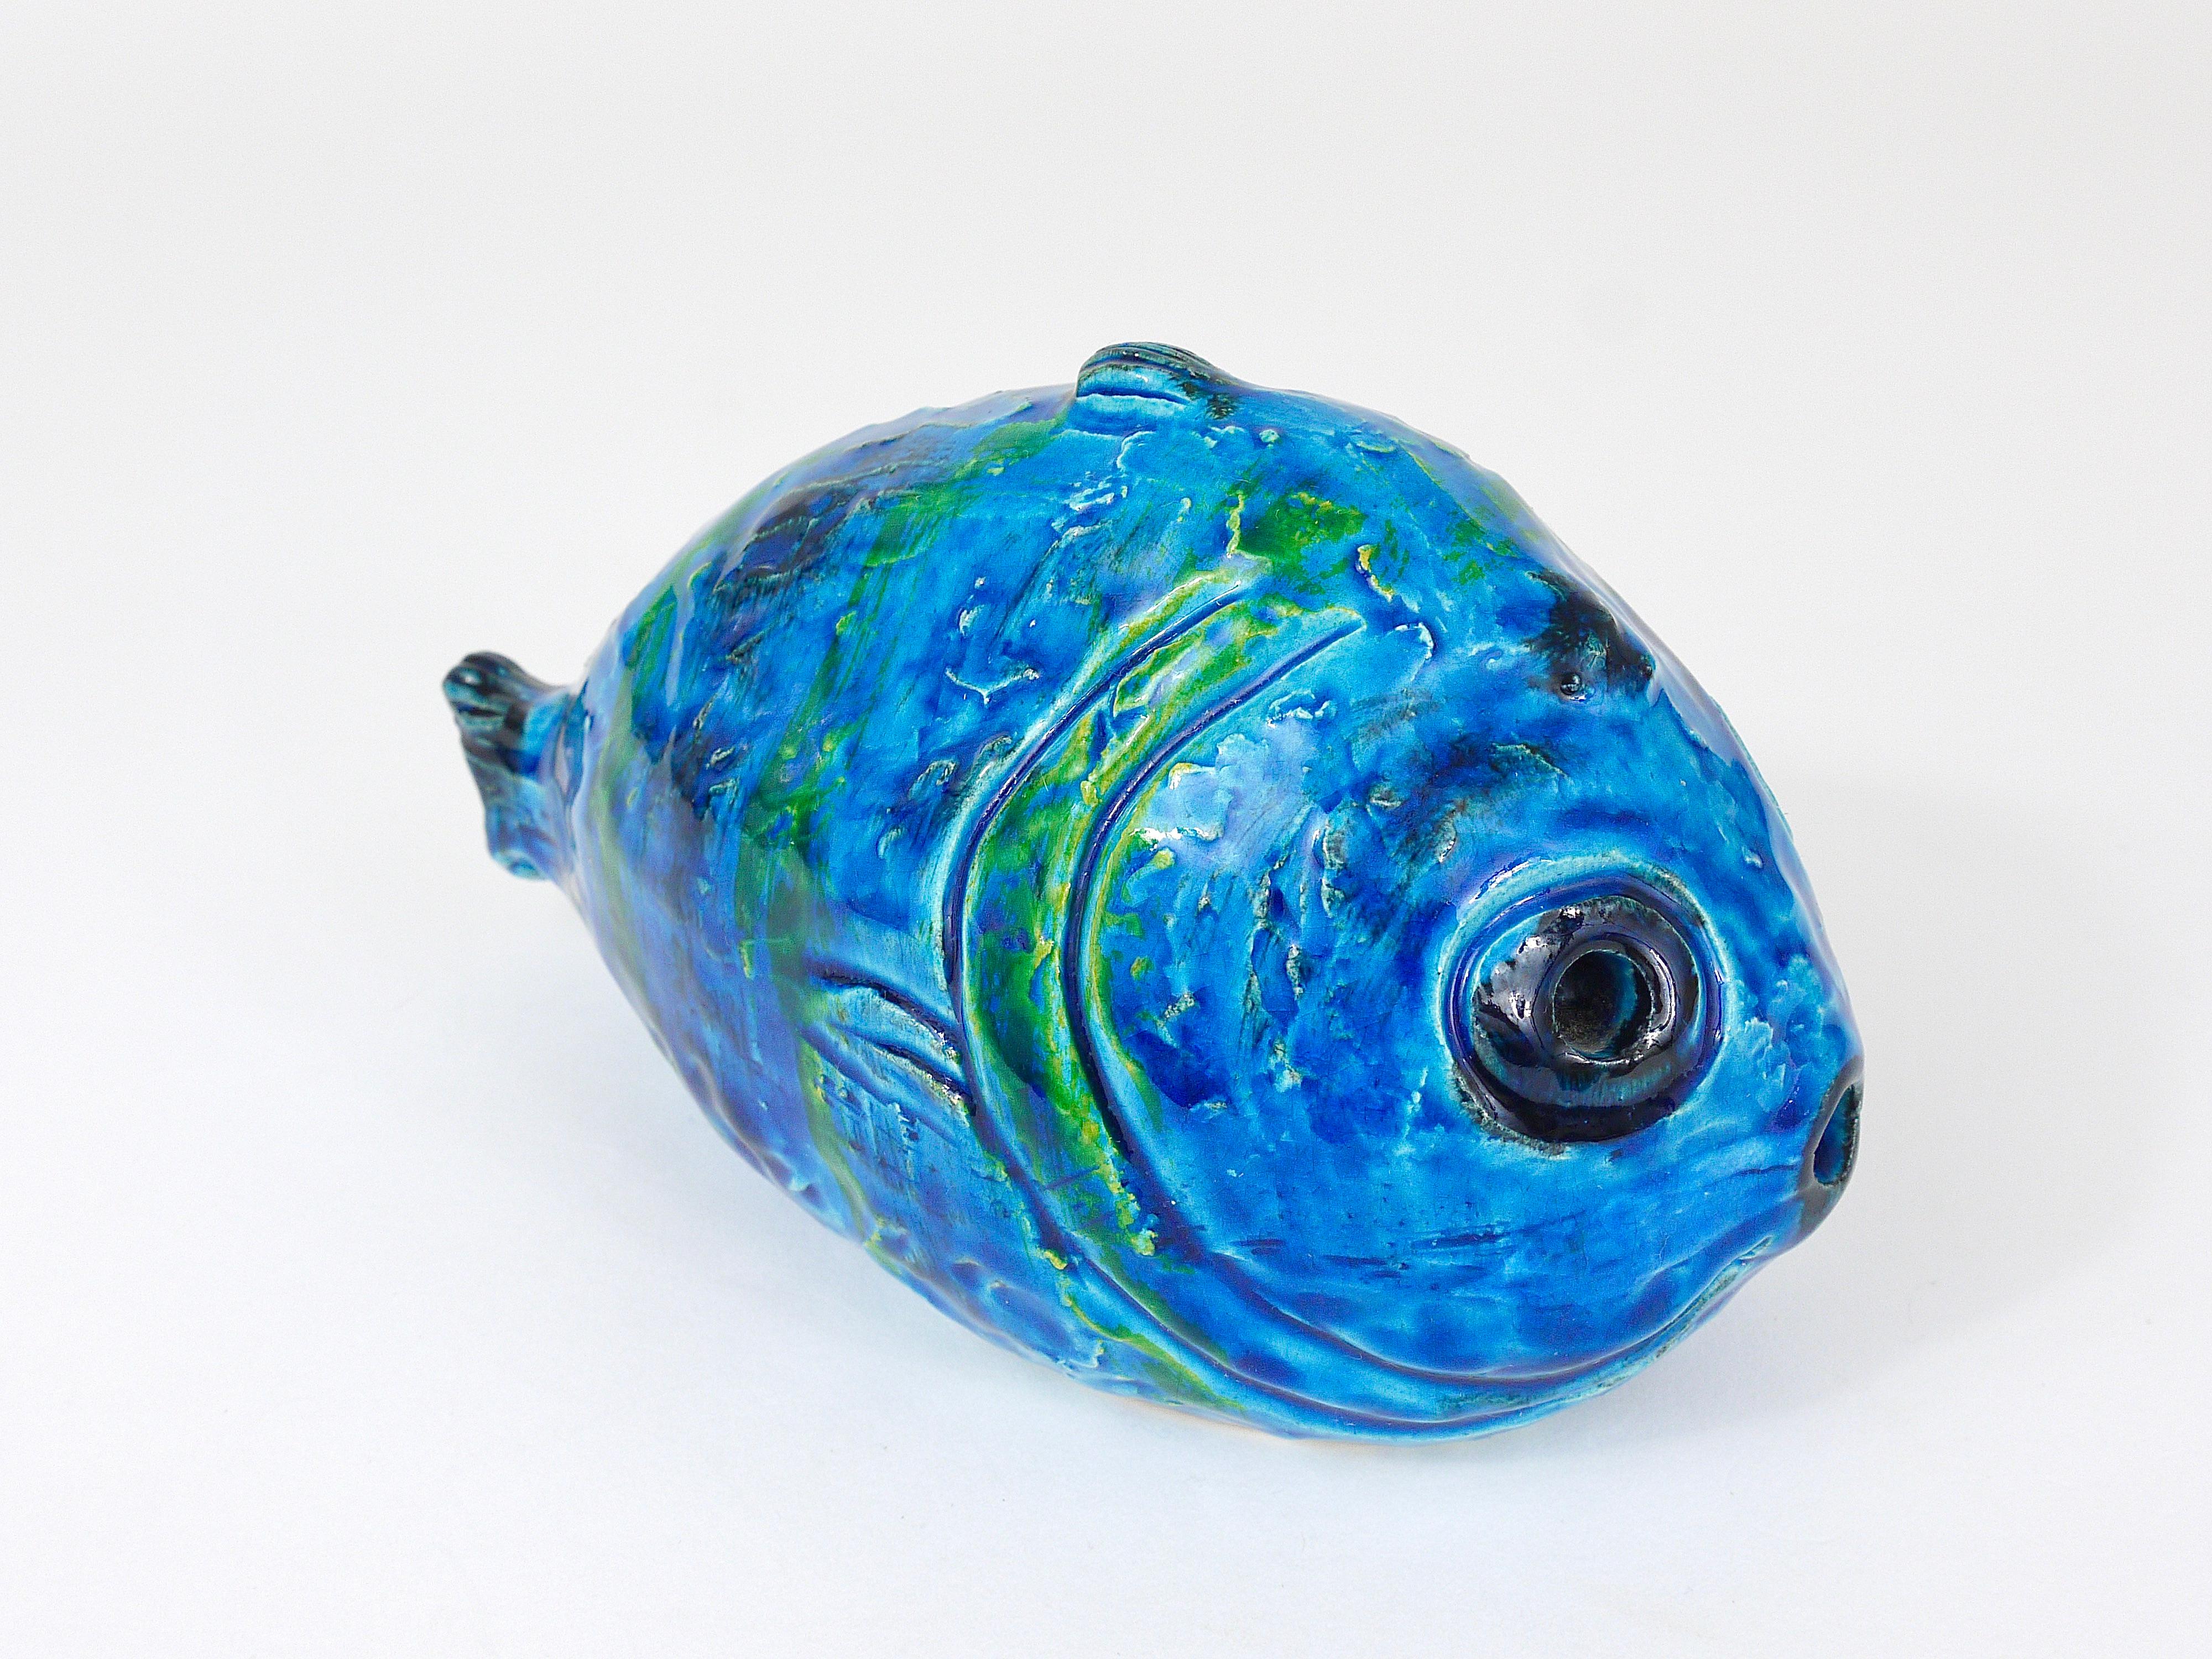 Aldo Londi Bitossi Rimini Blue Glazed Fish Sculpture Figurine, Italy, 1950s For Sale 1